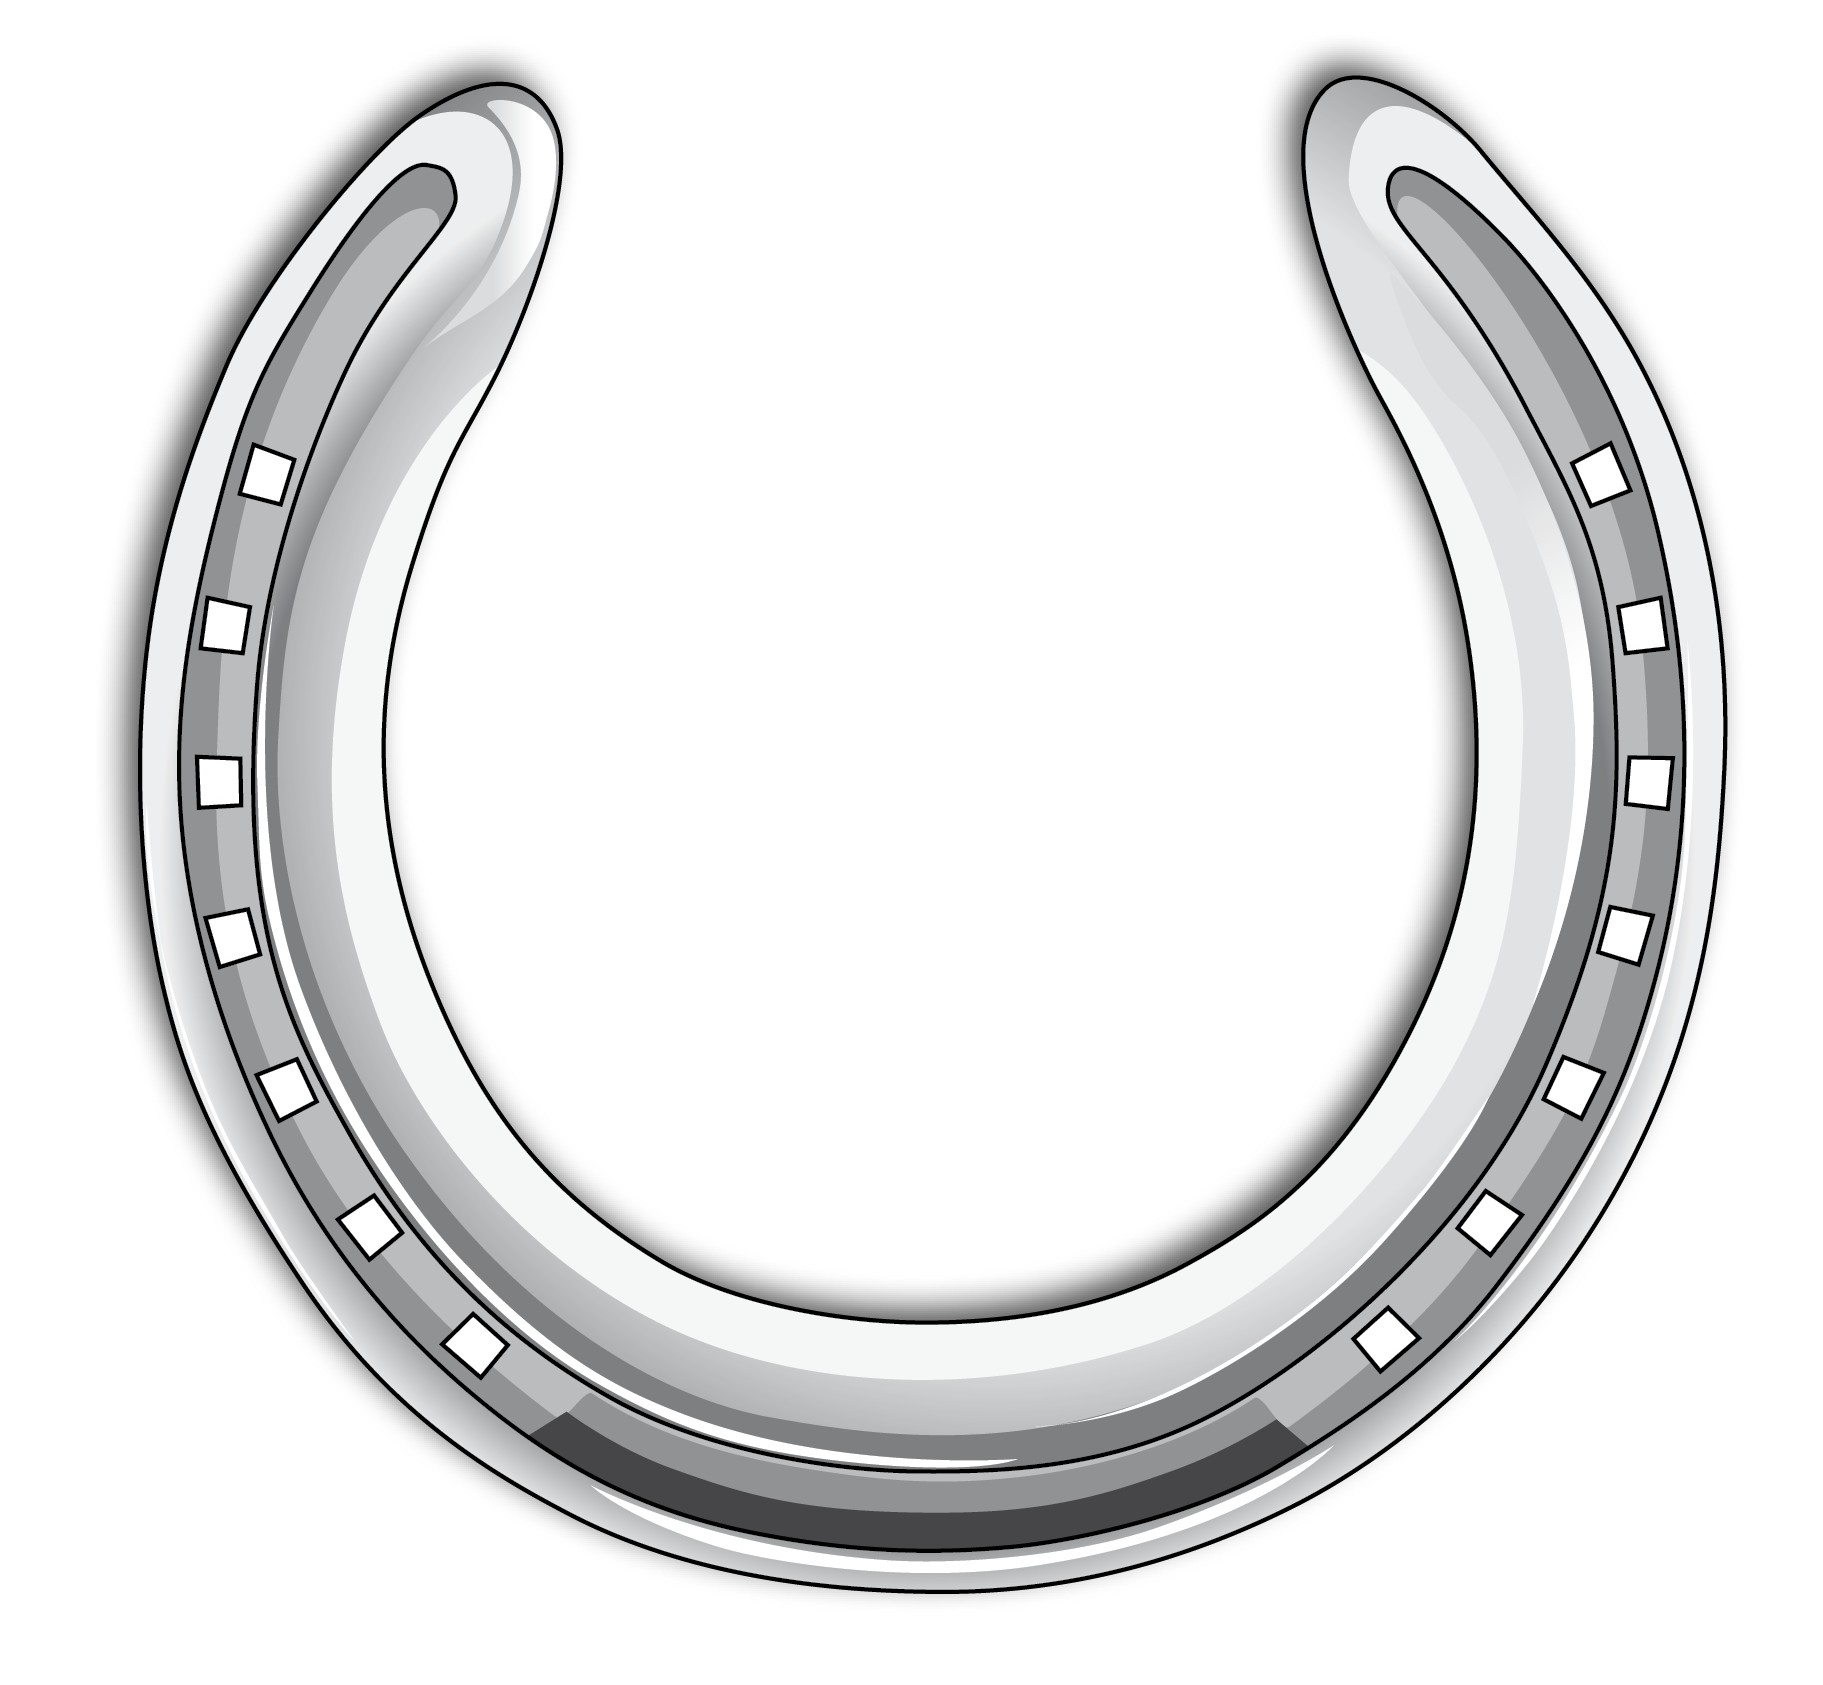 Horse shoe horseshoe clip art vector free clipart images 6 2